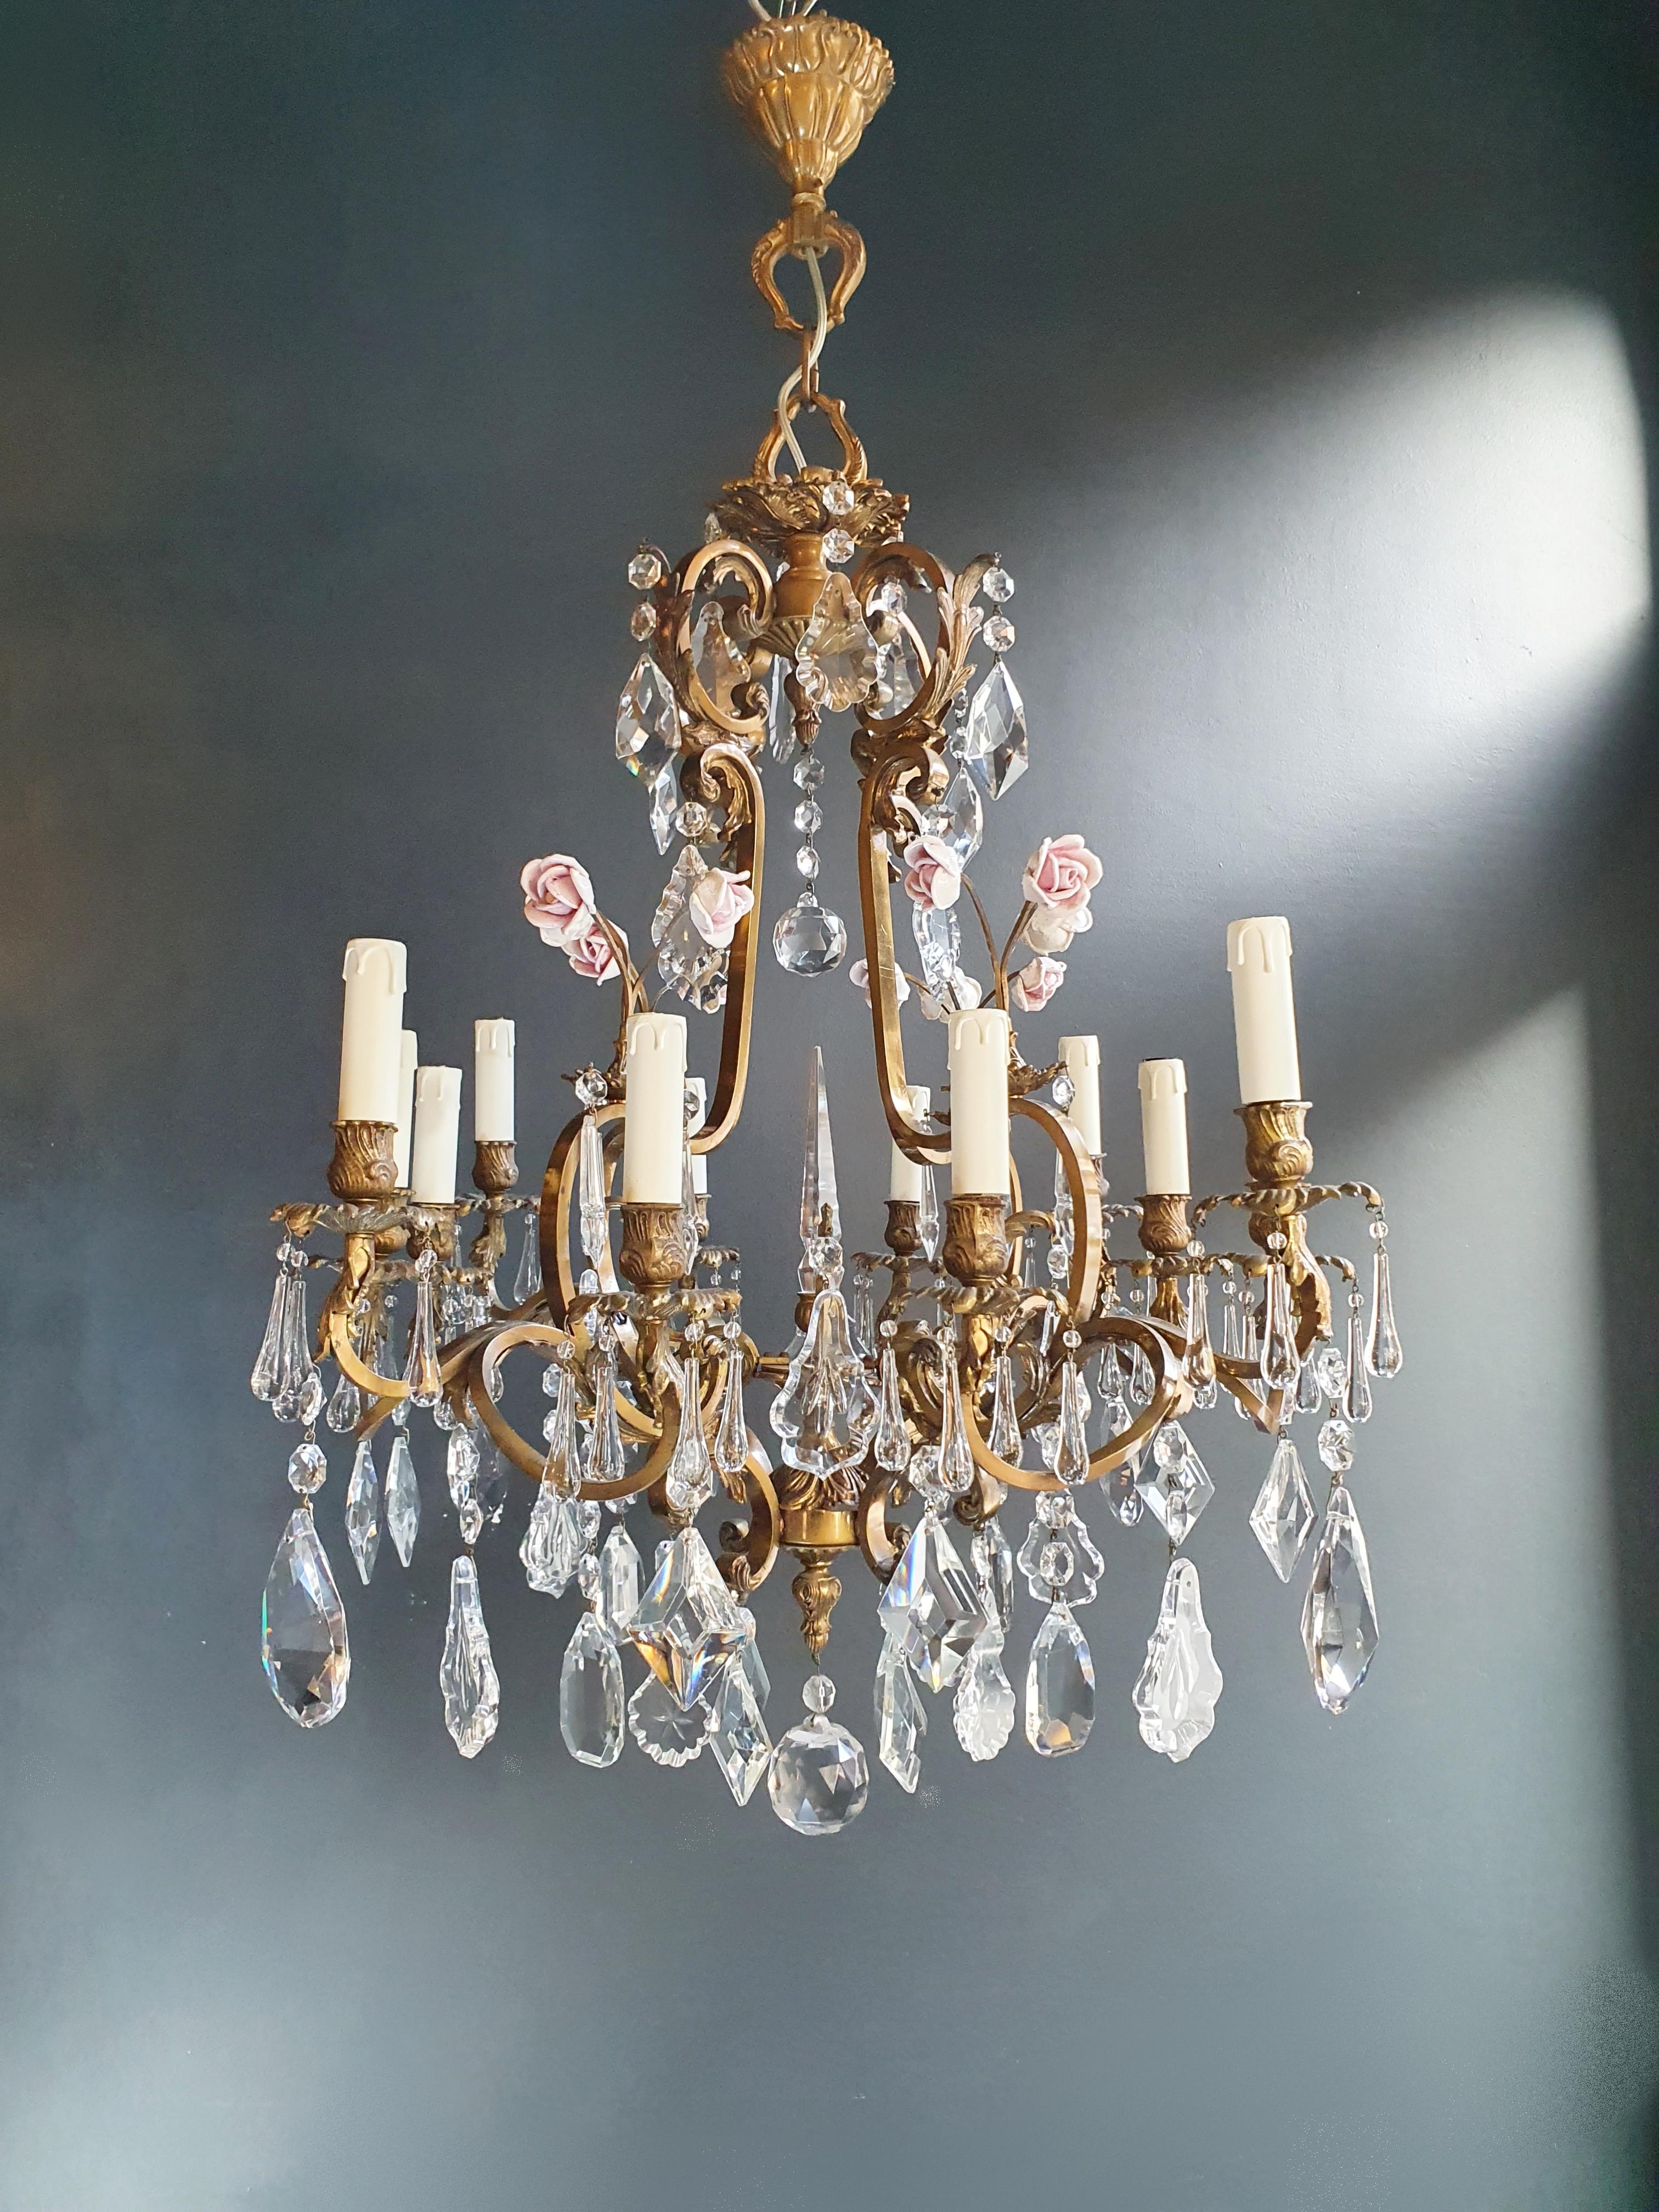 18th Century Rose Crystal Antique Chandelier Ceiling Florentiner Lustre Art Nouveau For Sale